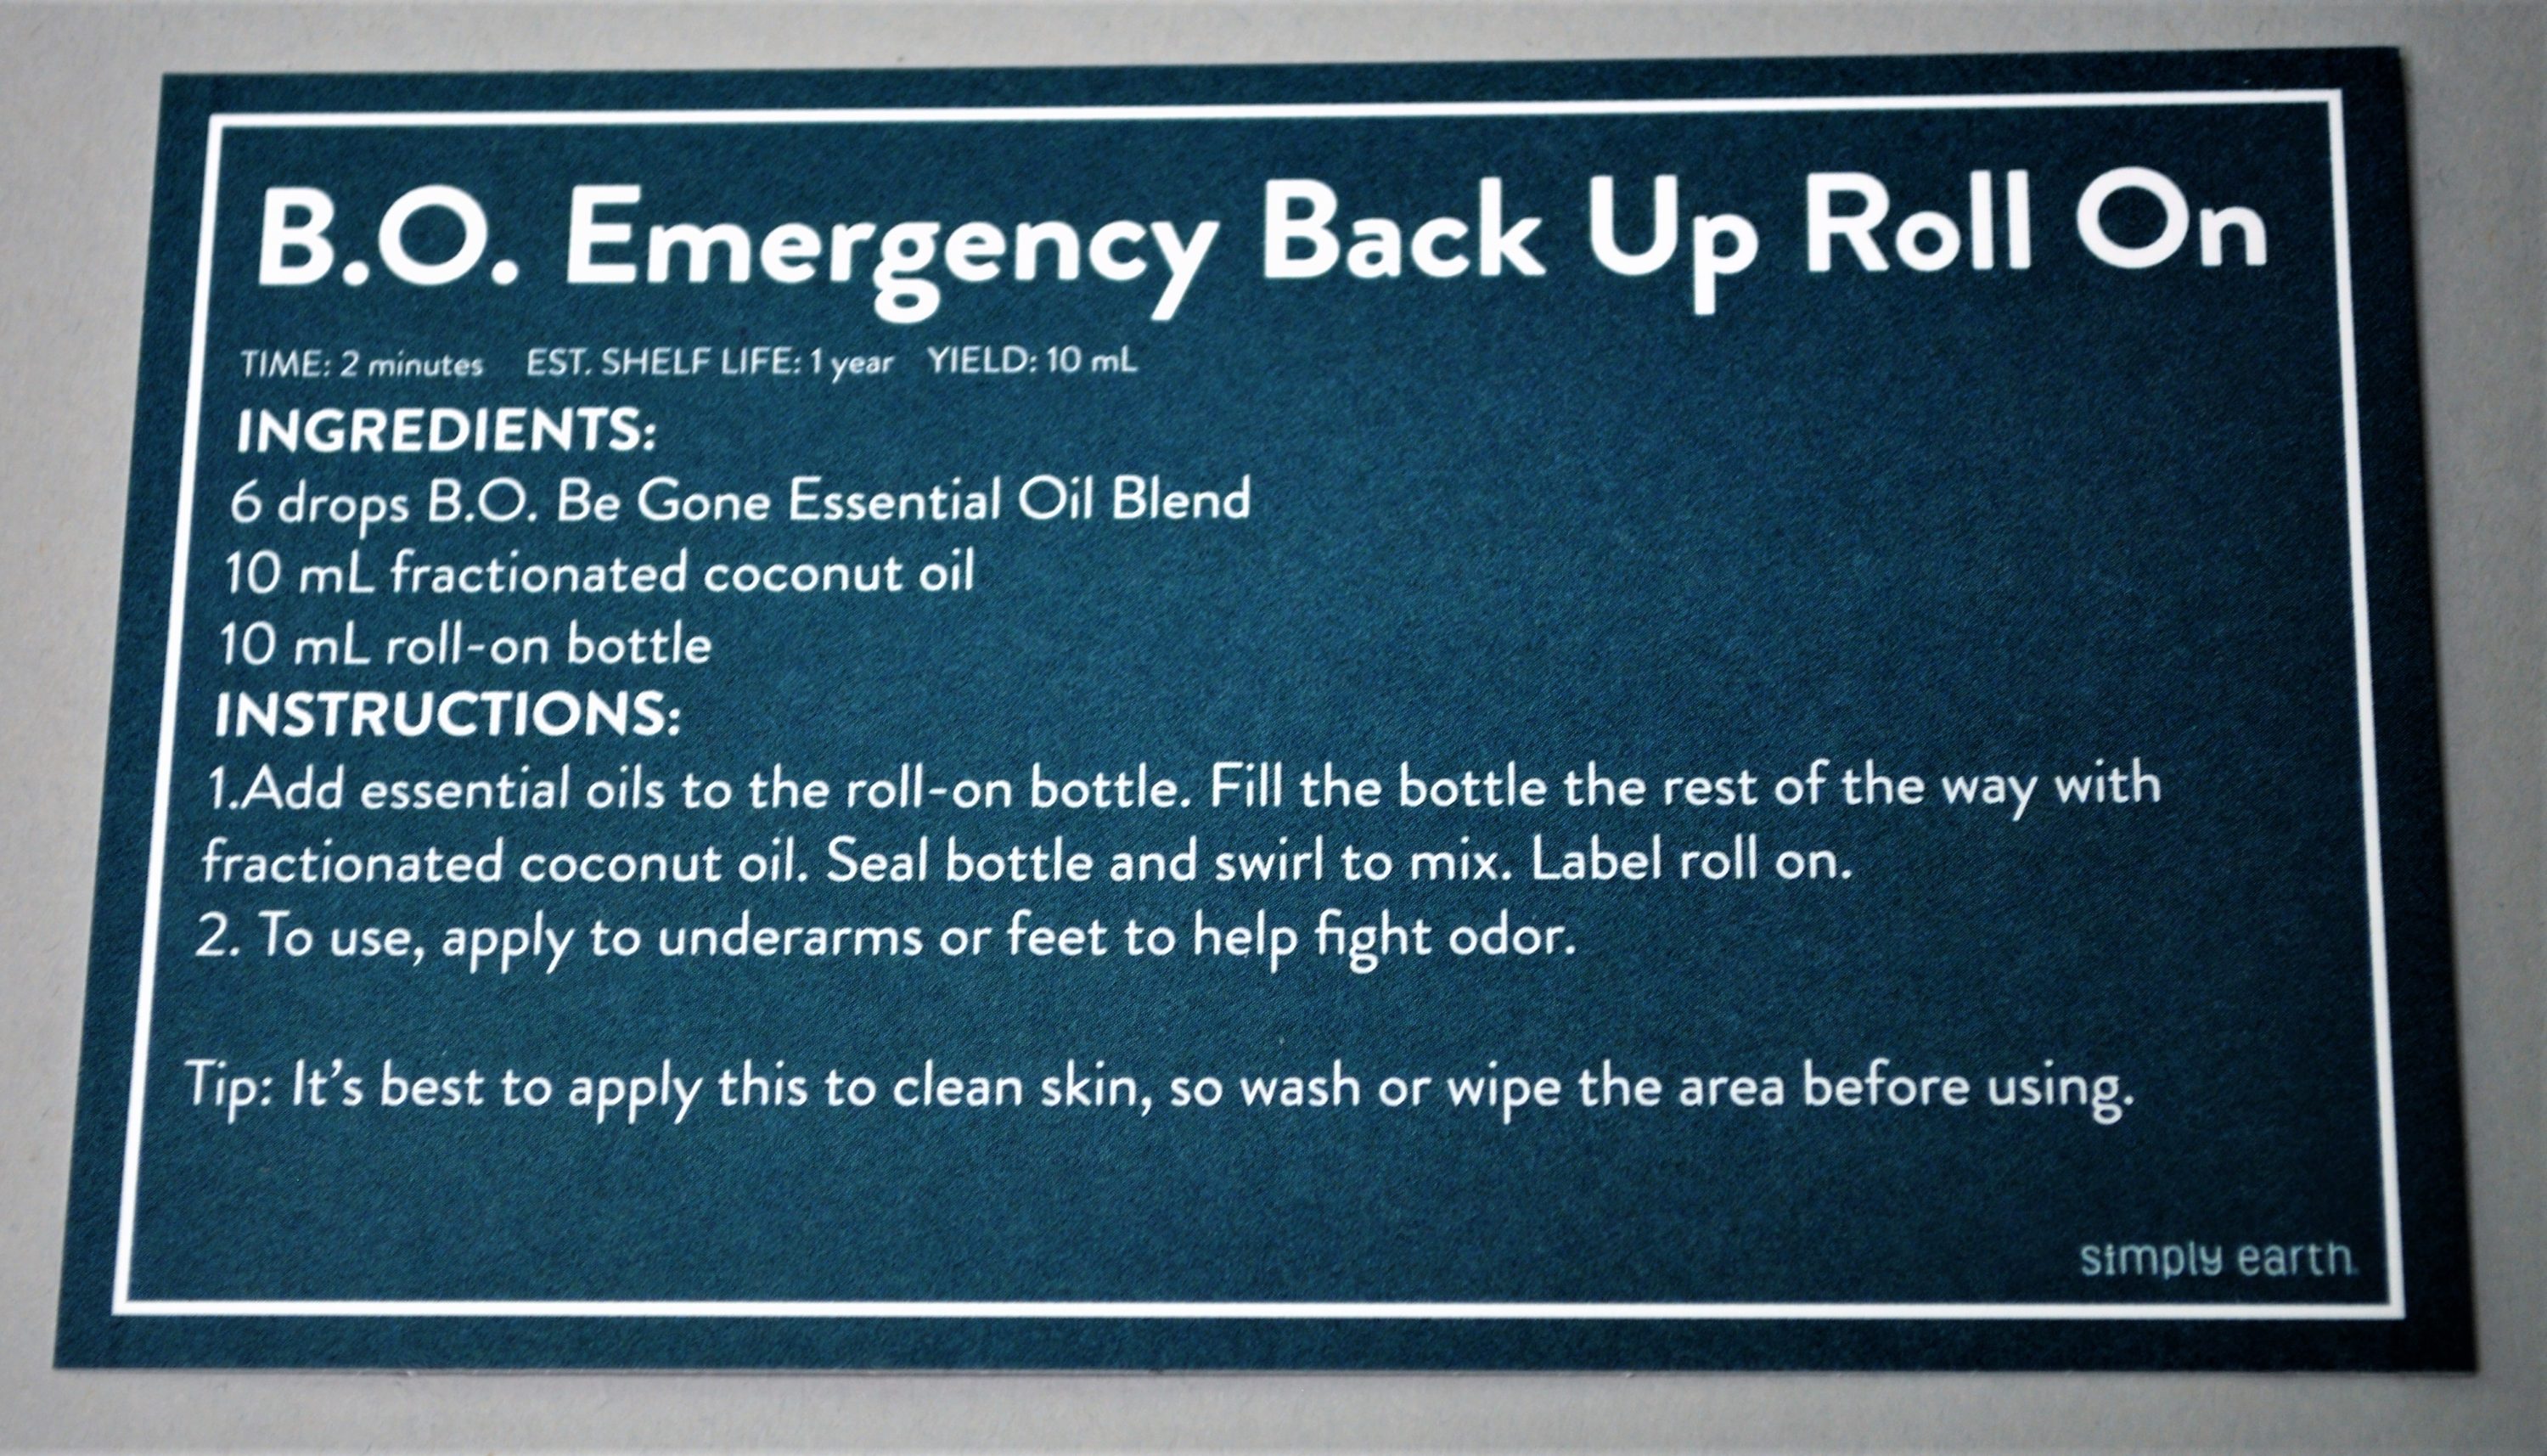 B.O. Emergency Back Up Roll On Recipe Card